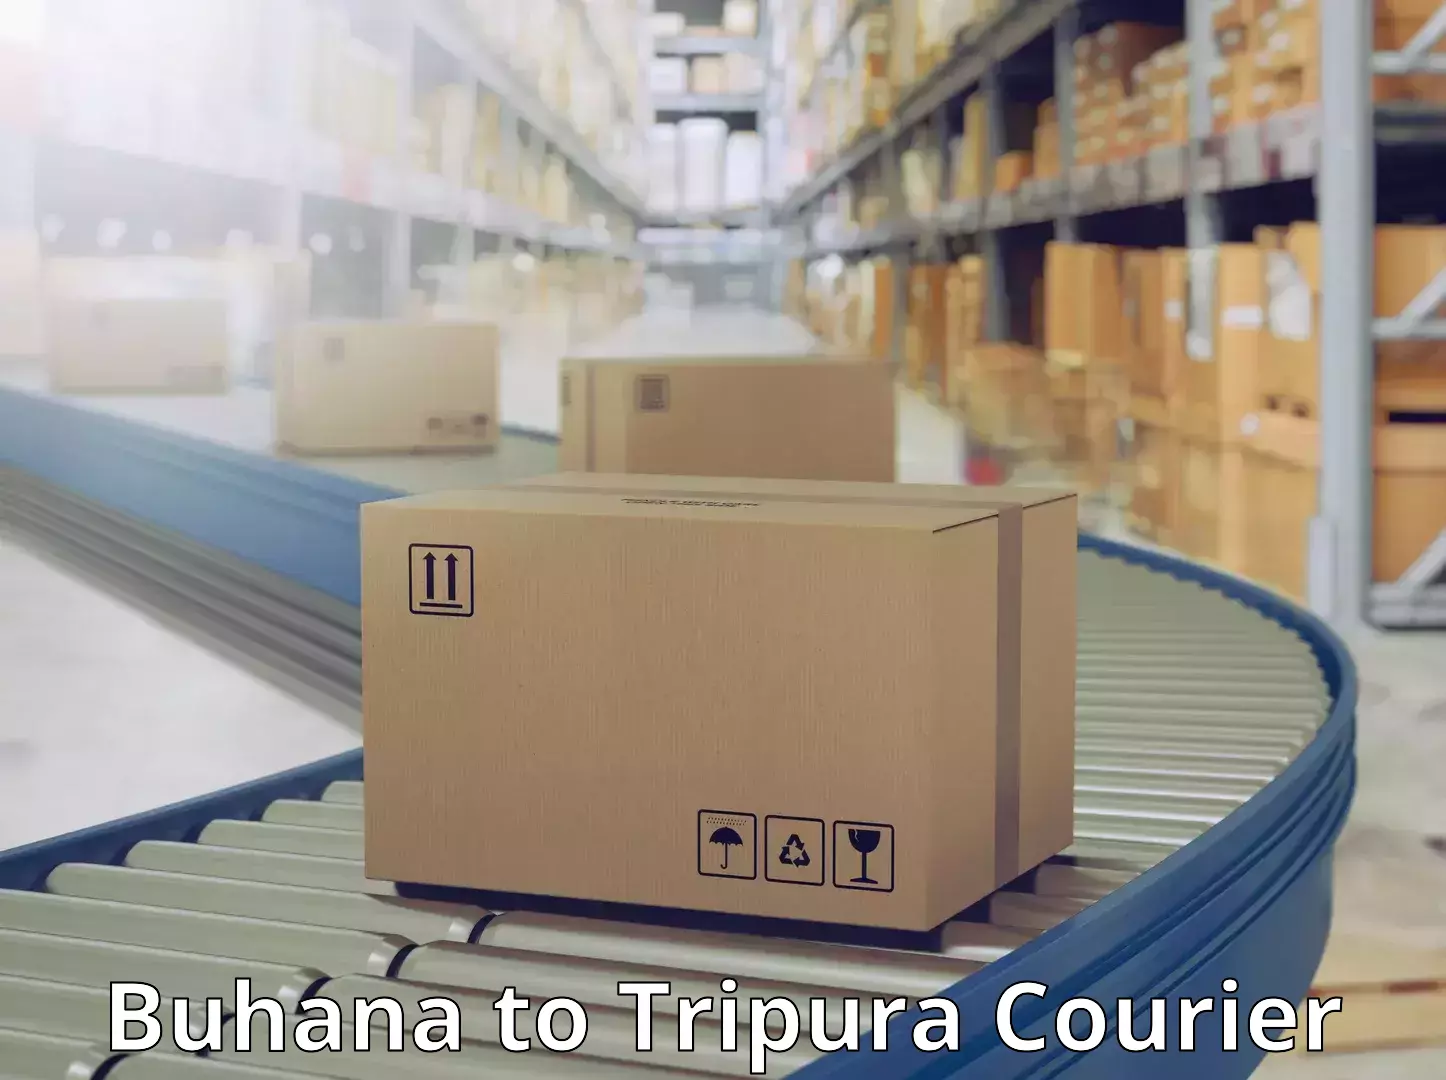 Courier service comparison Buhana to Tripura